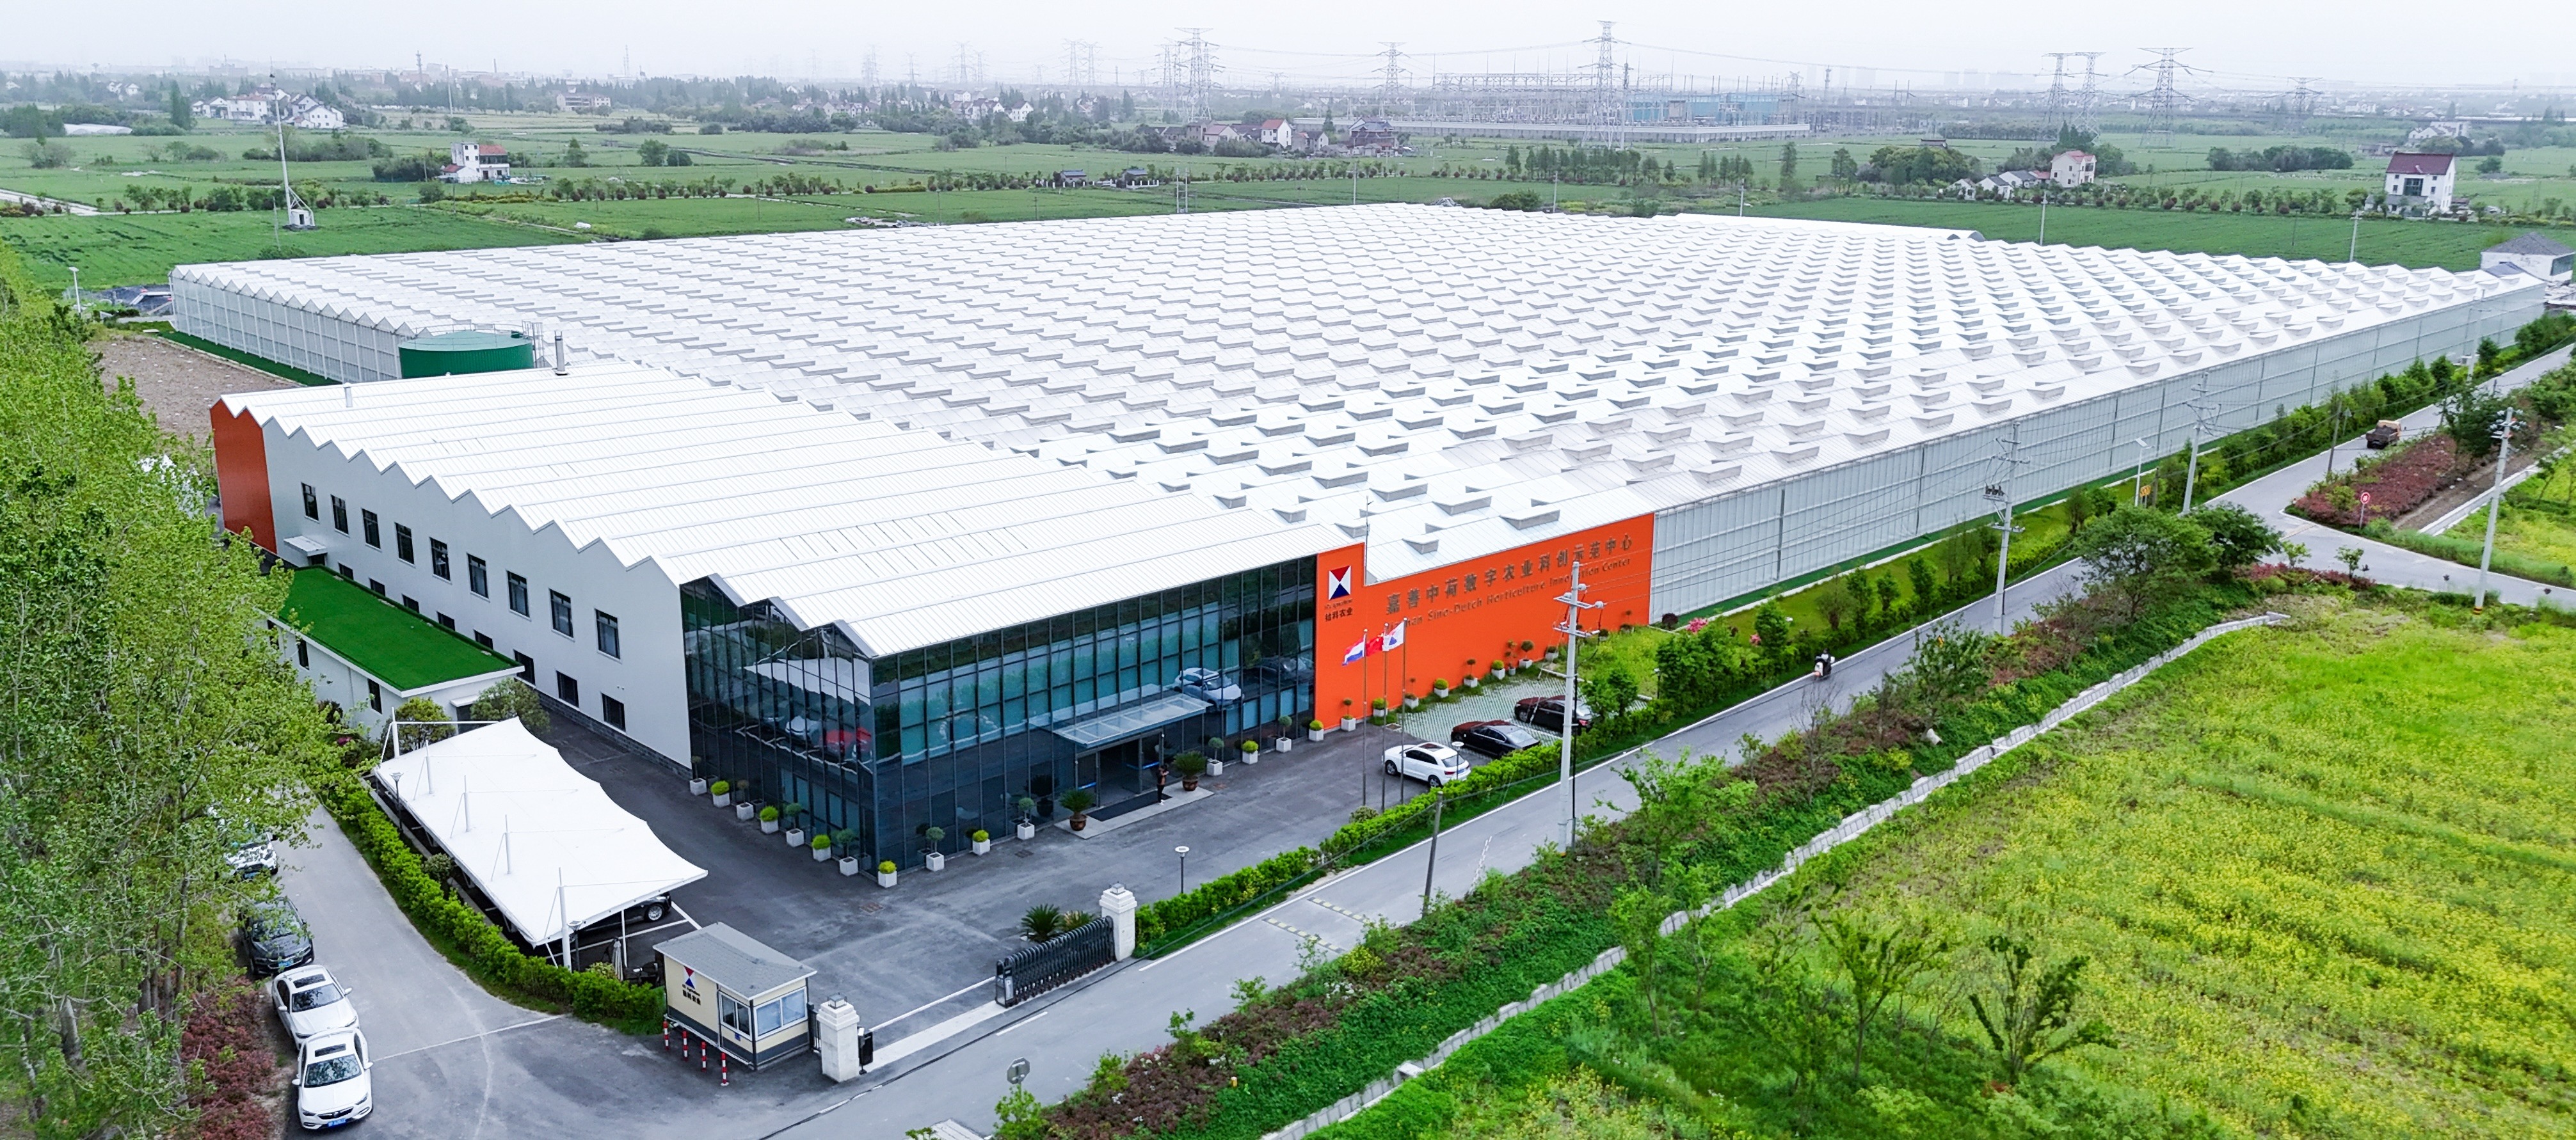 Jiashan Sino-Dutch Agricultural Digital Science and Innovation Demonstration Center gebouw van bovenaf